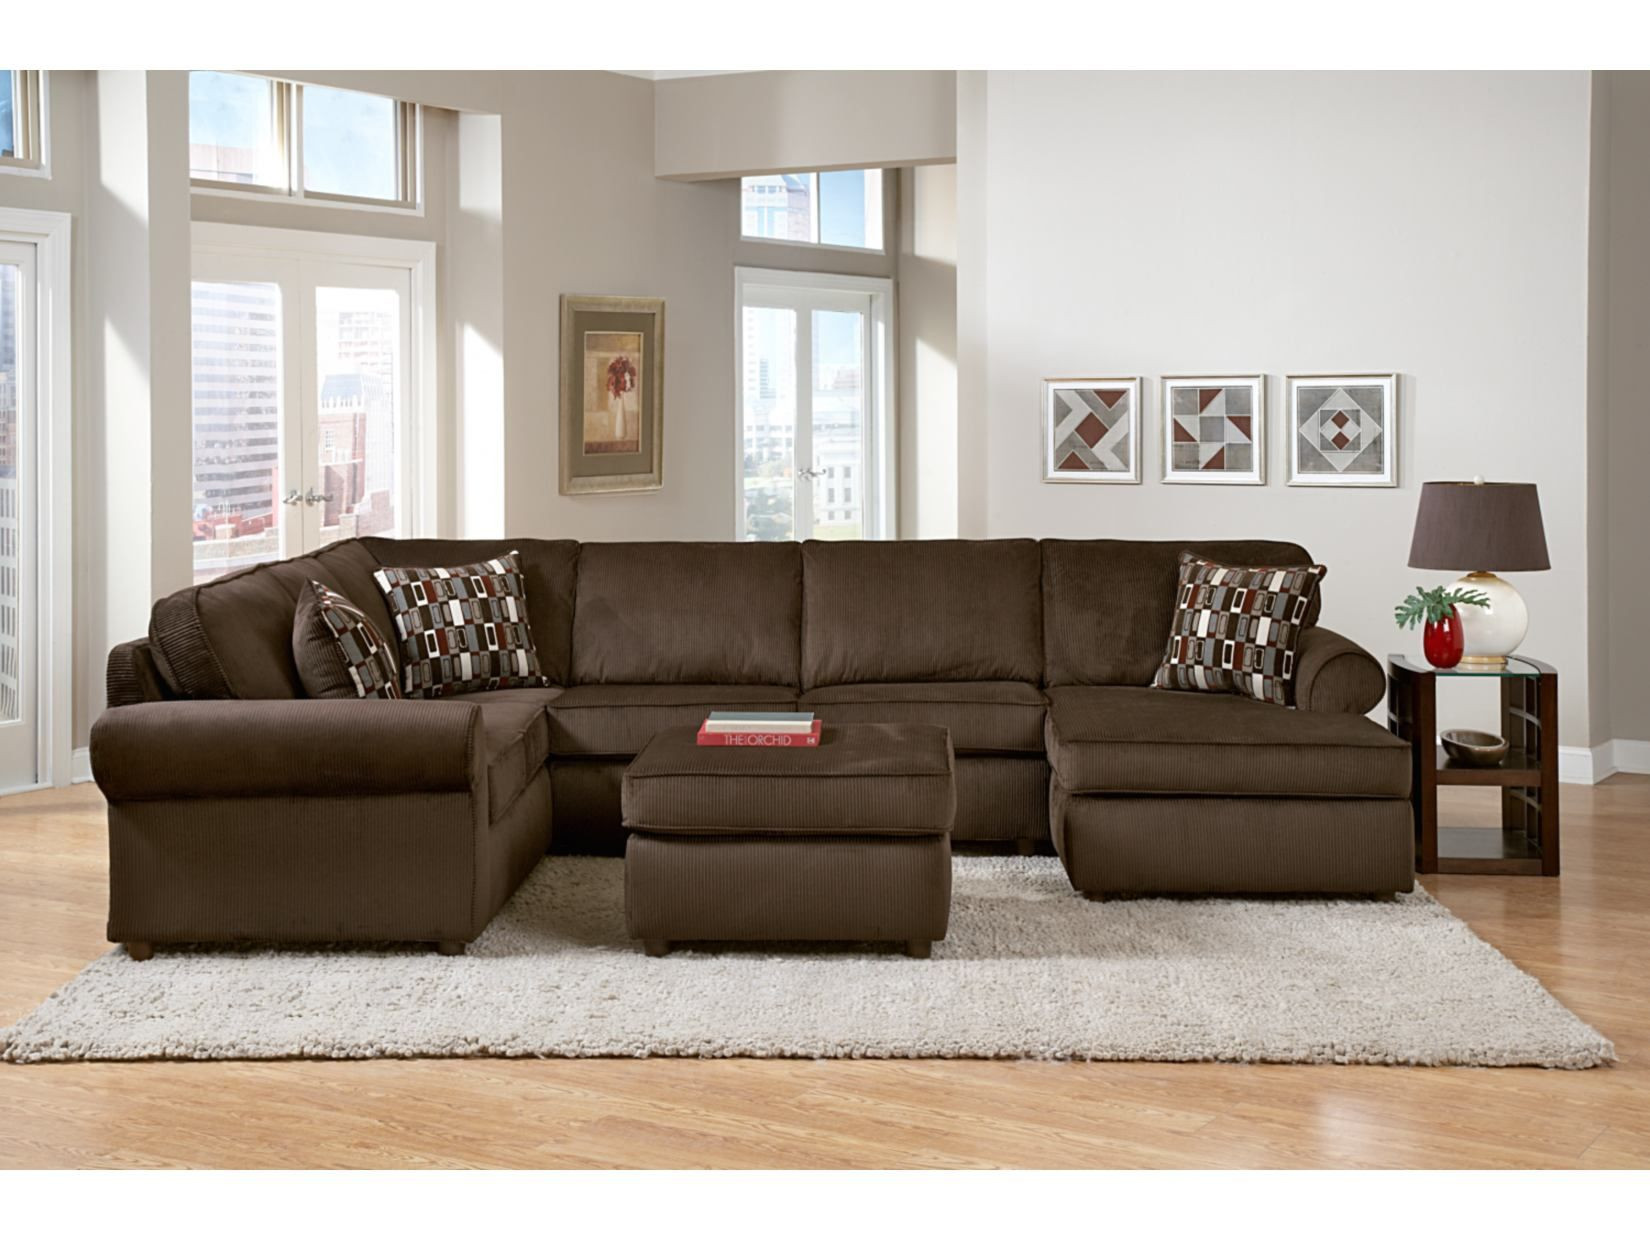 Value City Living Room Tables
 Value City Furniture Leather Living Room Sets – Modern House